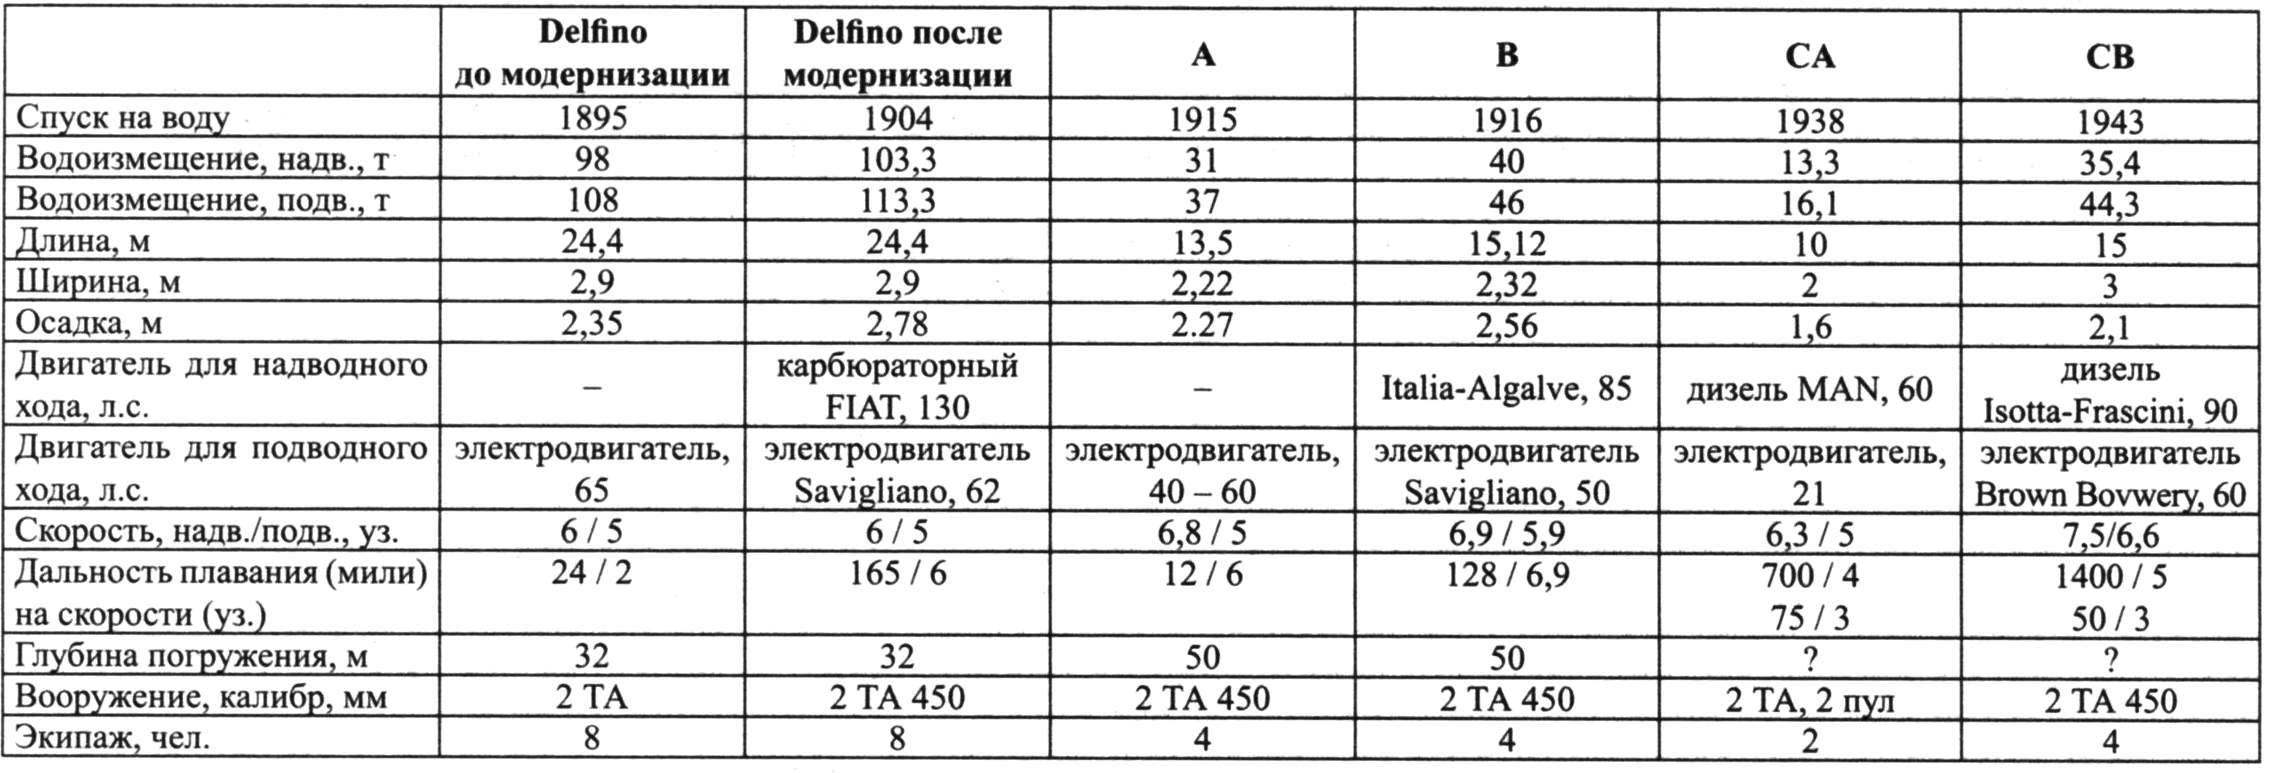 The performance characteristics of the Italian midget submarines